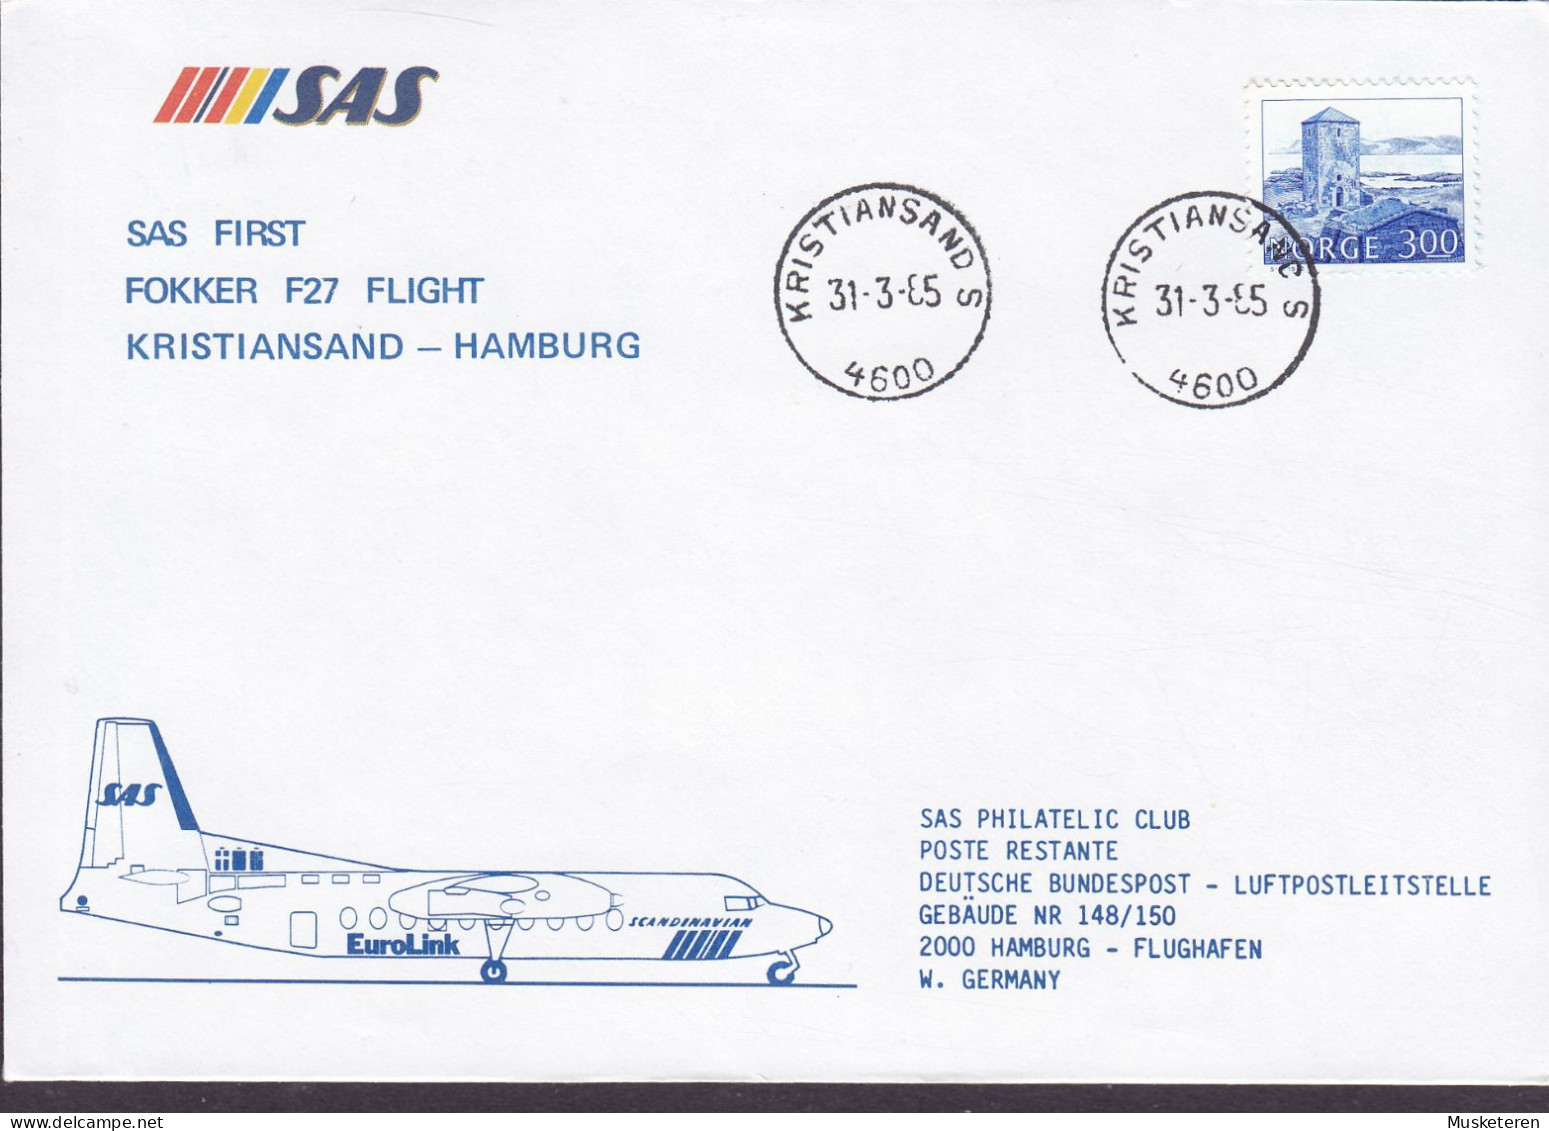 Norway SAS First Fokker F27 Flight KRISTIANSAND-HAMBURG 1985 Cover Brief Lettre Kloster Selje, Selja Stamp - Lettres & Documents